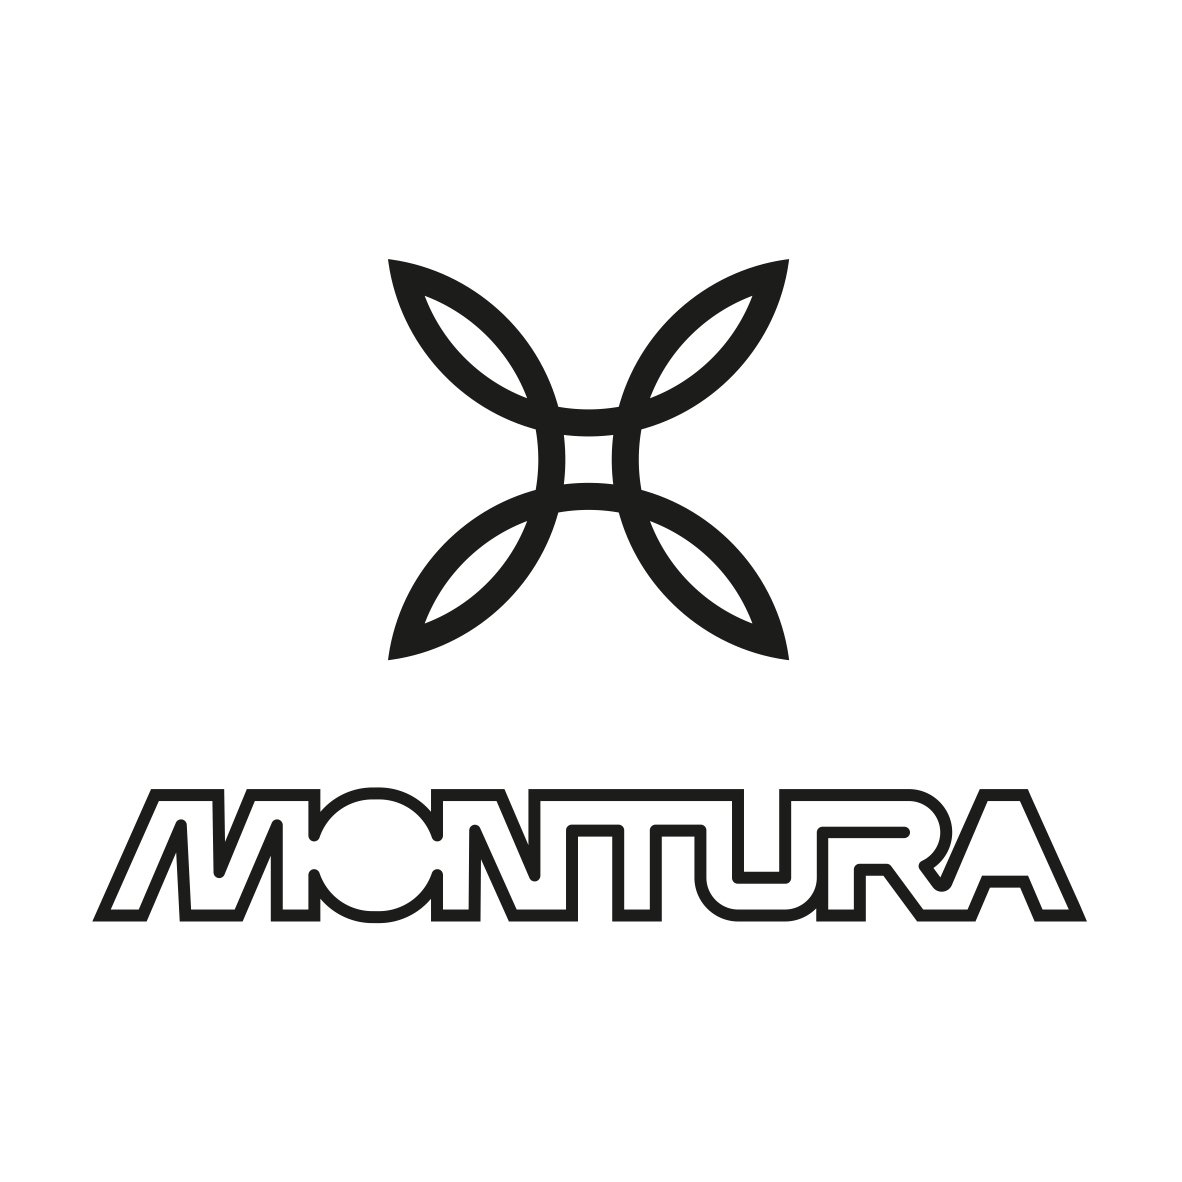 montura_logo_black_page-0001.jpg